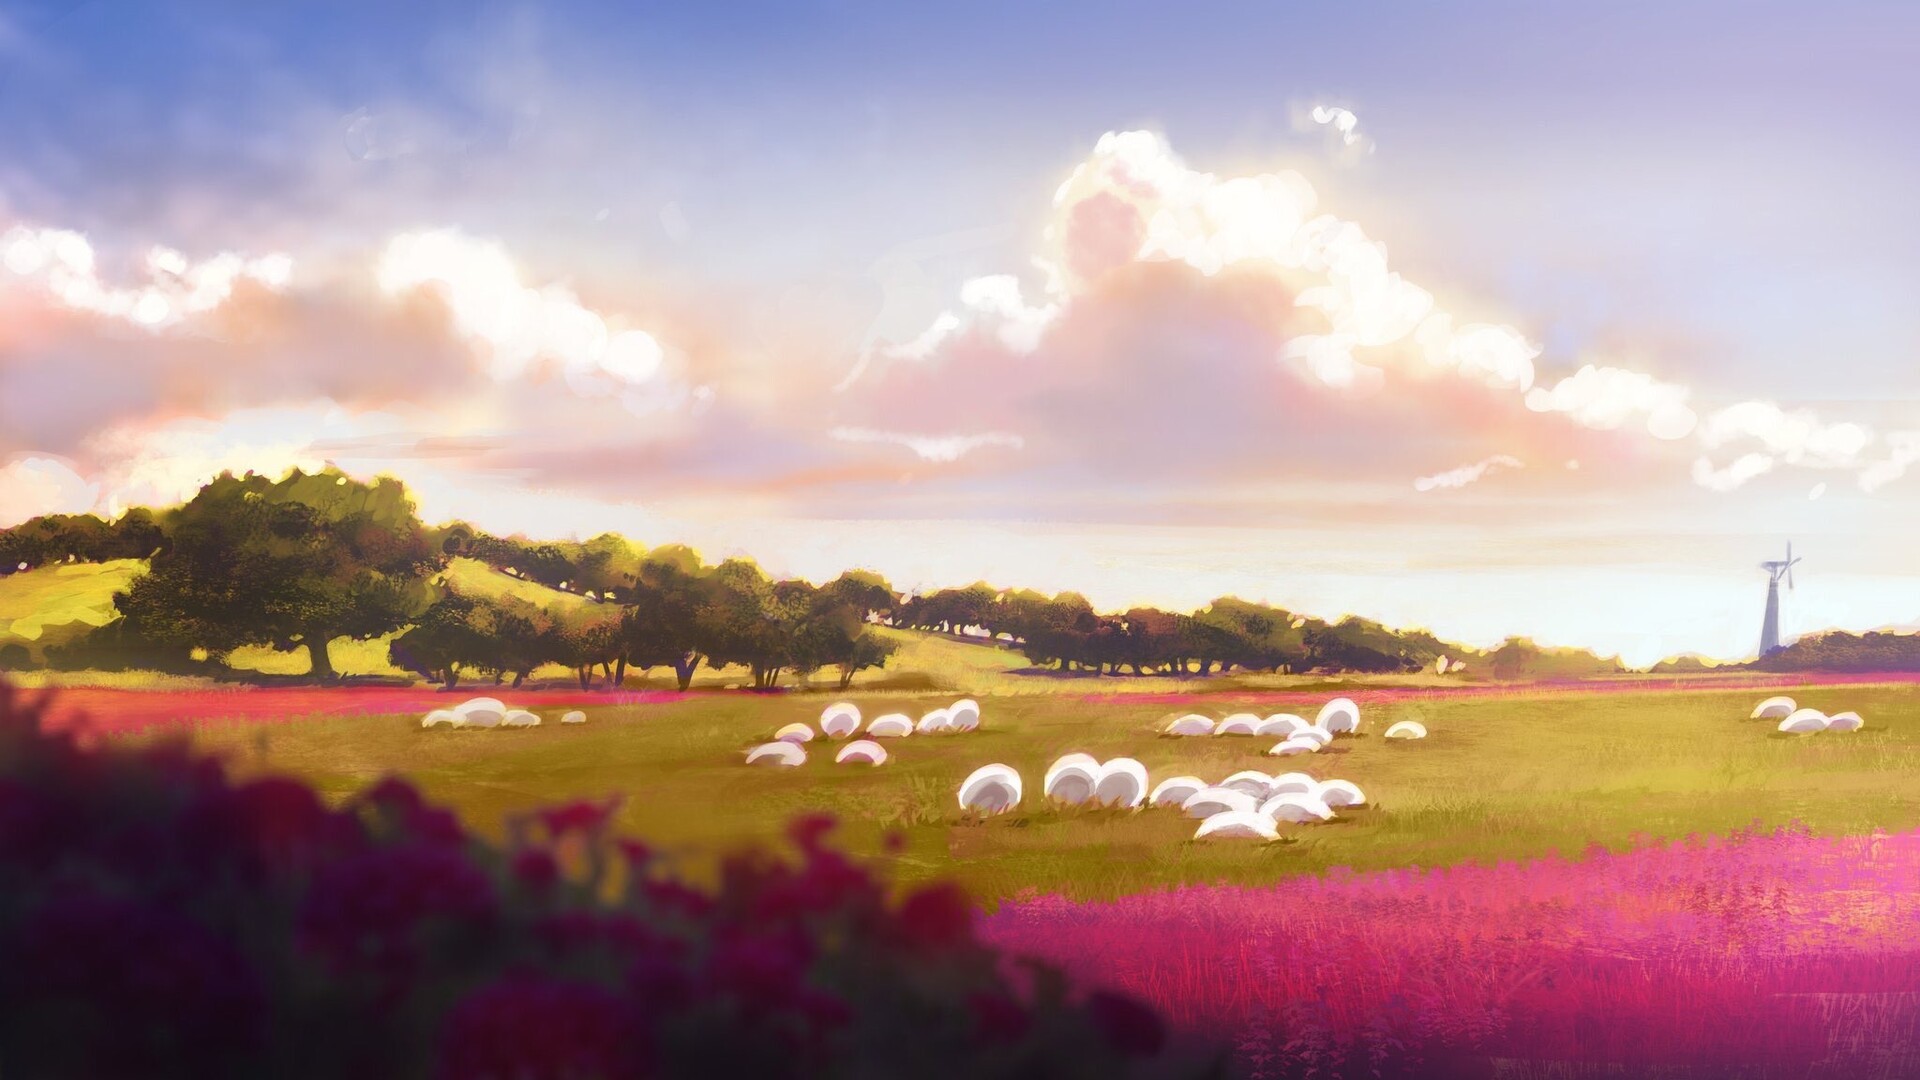 General 1920x1080 digital art clouds sunlight sky trees sheep animals flowers field pink flowers